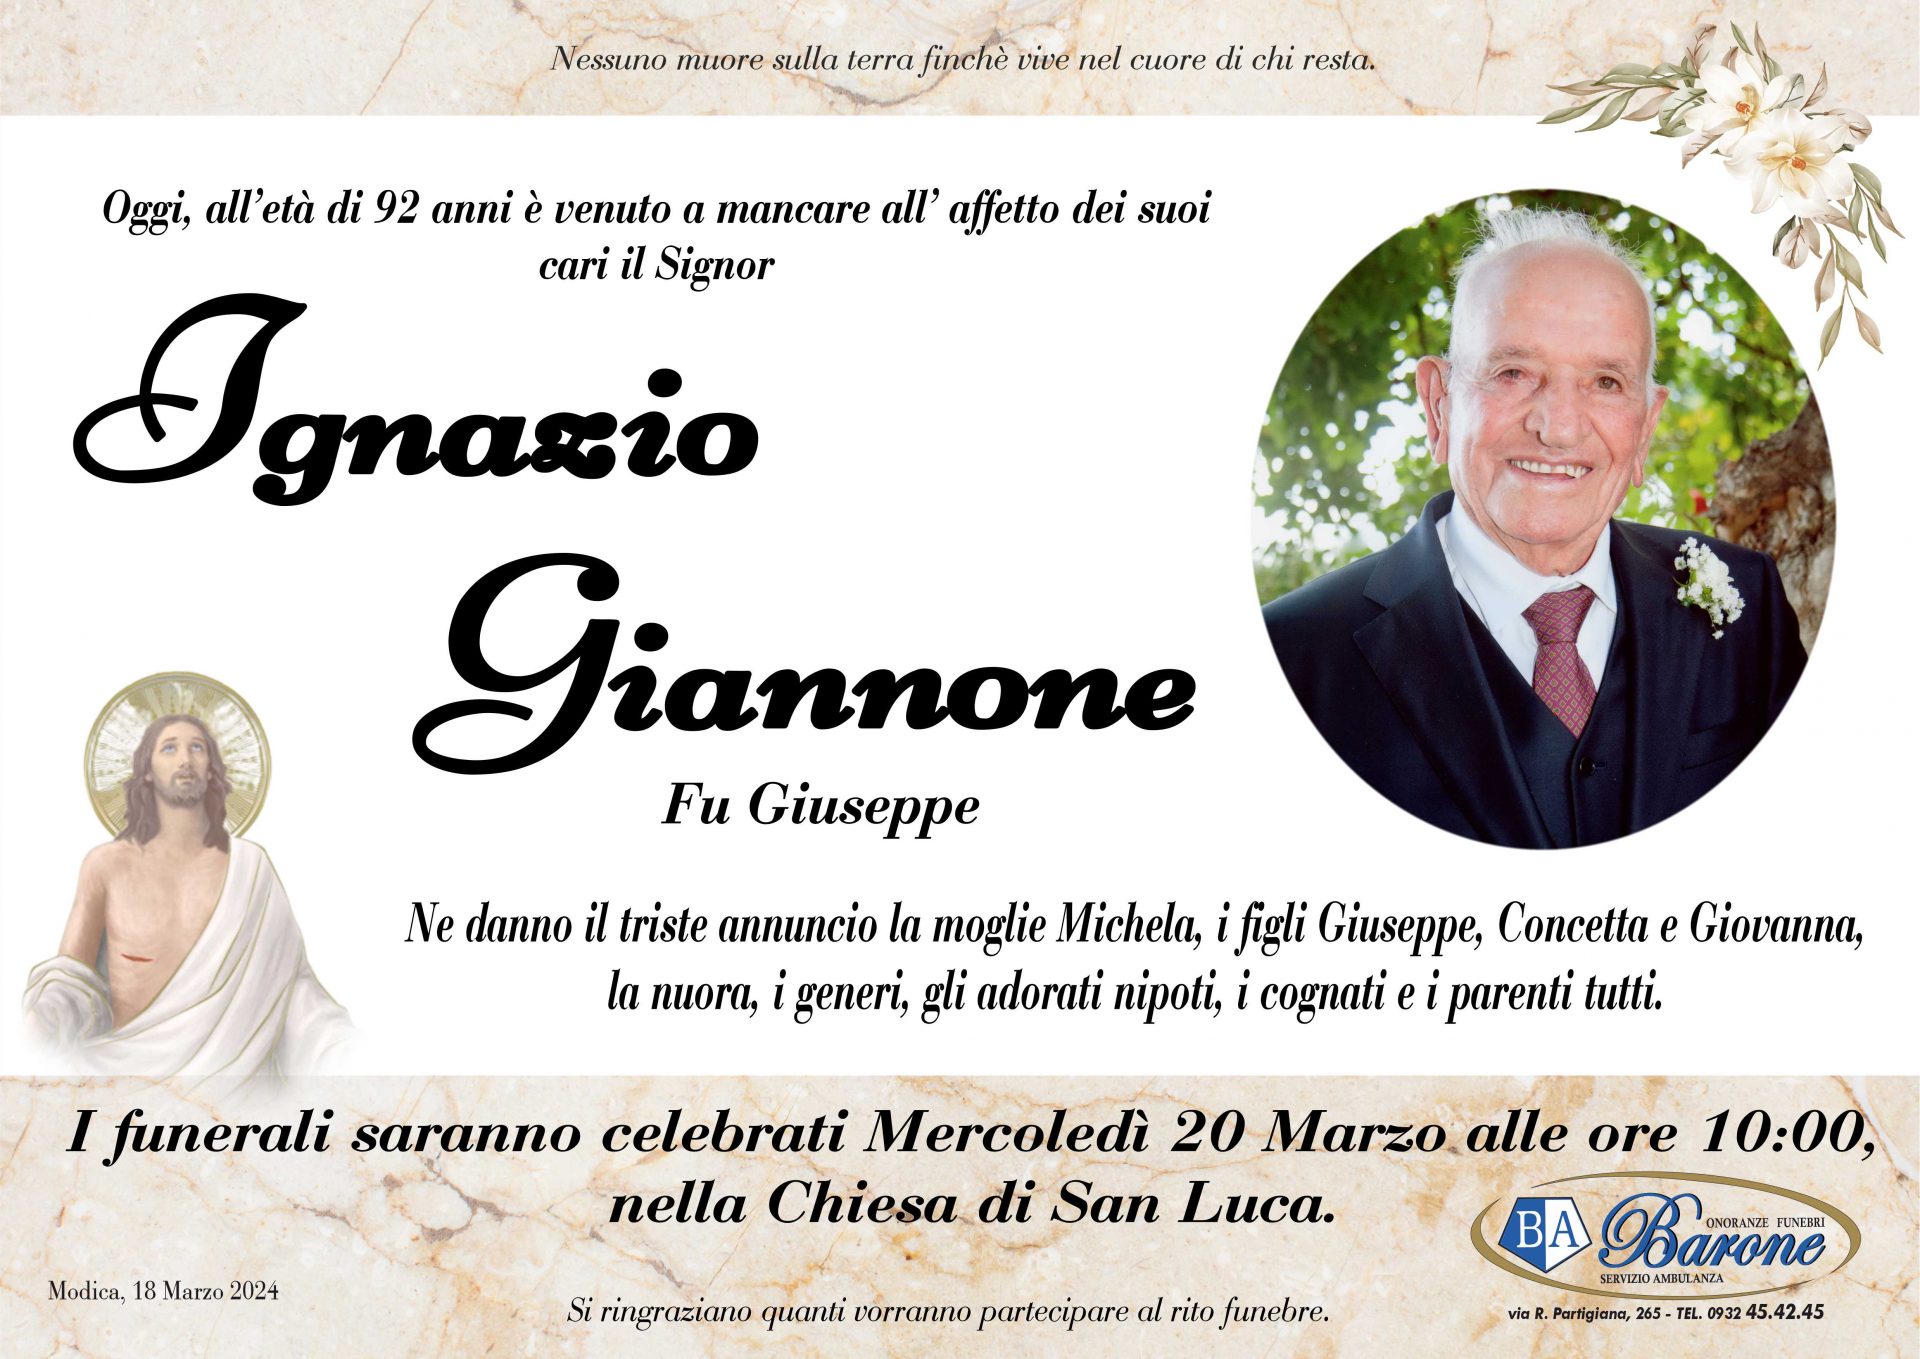 Ignazio Giannone